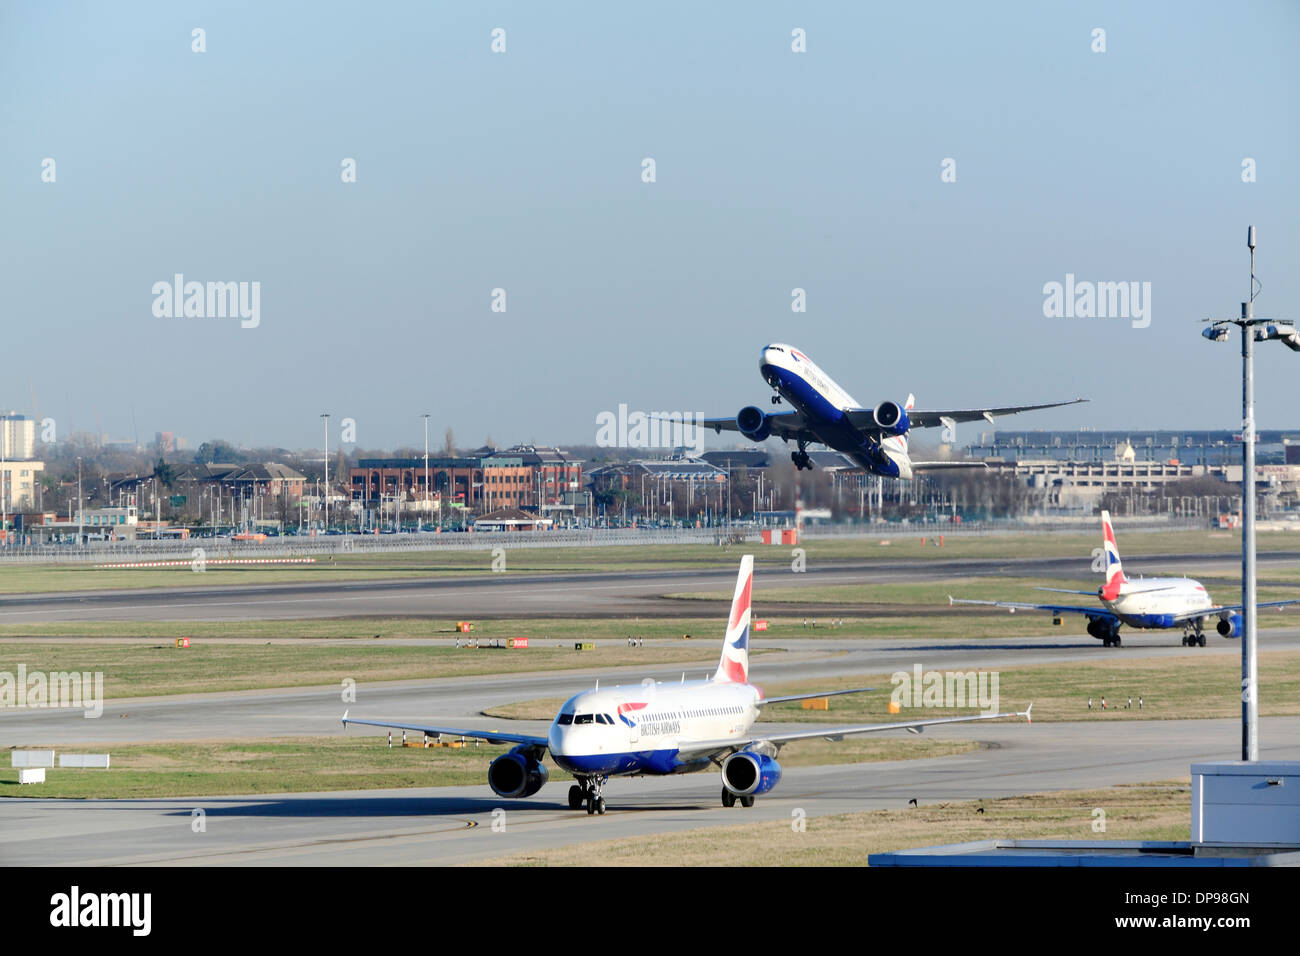 British Airways Boeing 767 takes off at Heathrow Airport runway 27R Stock Photo